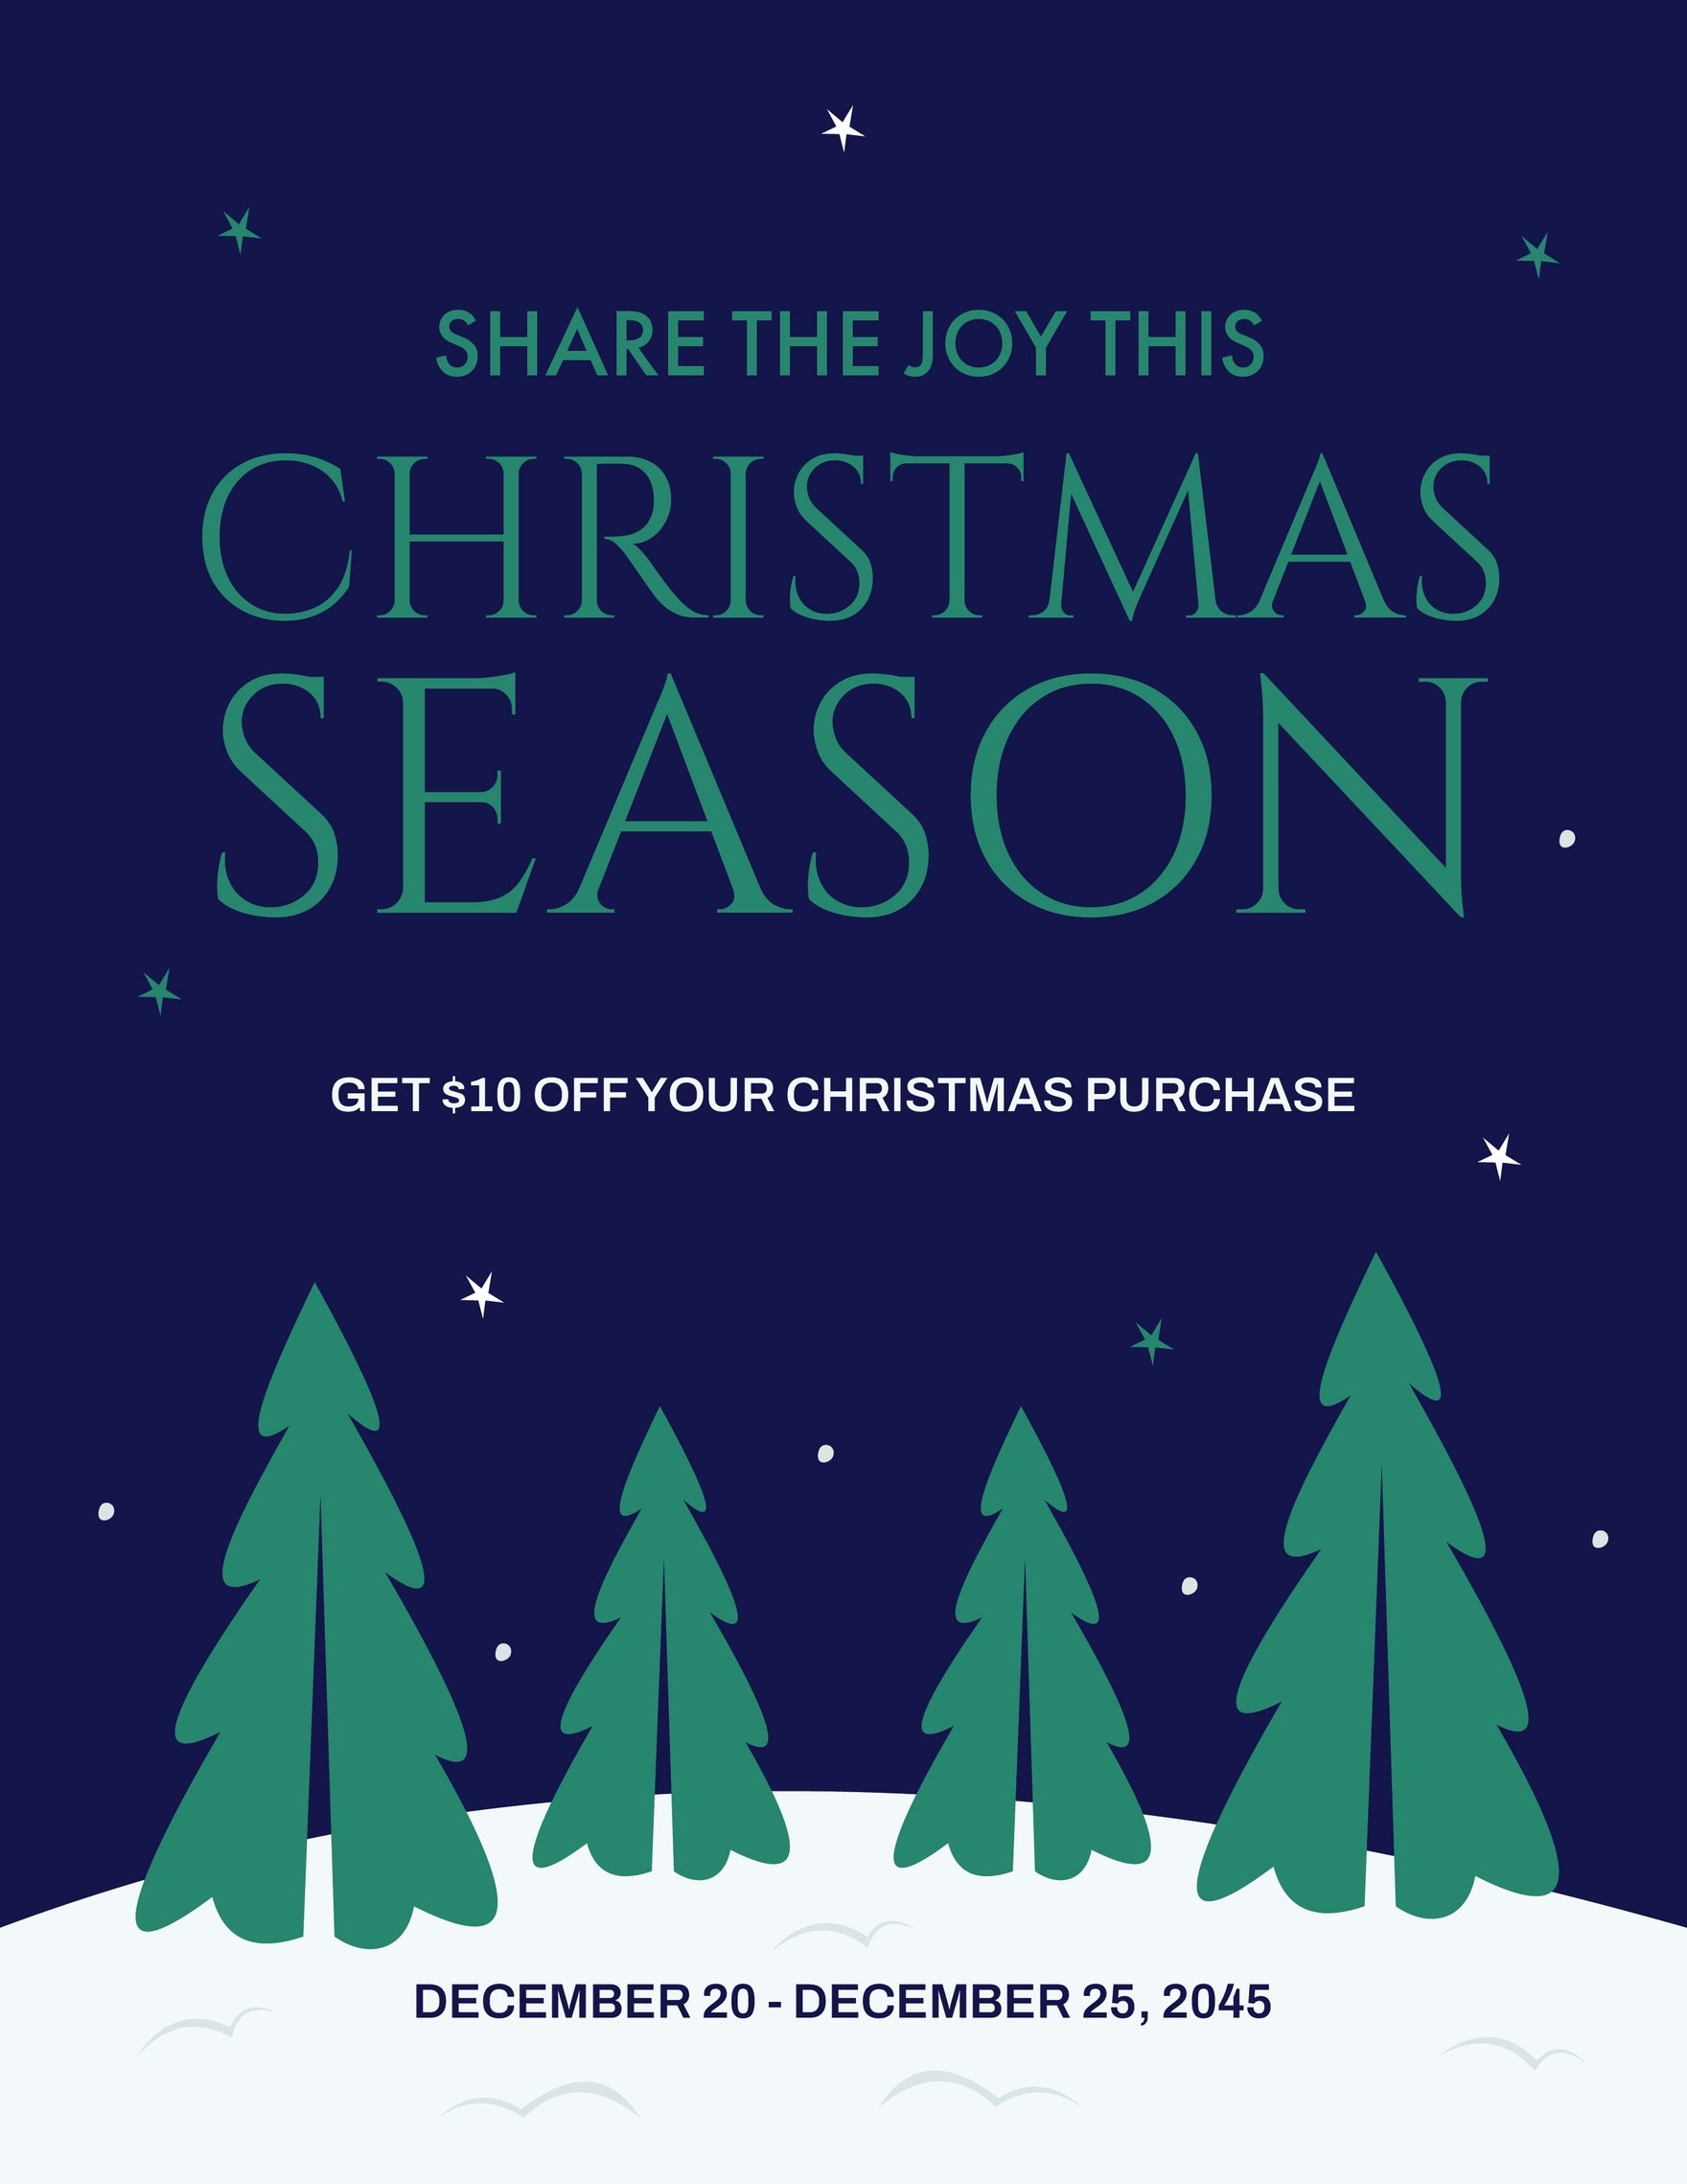 Free Christmas Mockup Flyer in Word, Google Docs, Illustrator, PSD, Apple Pages, Publisher, EPS, SVG, JPG, PNG